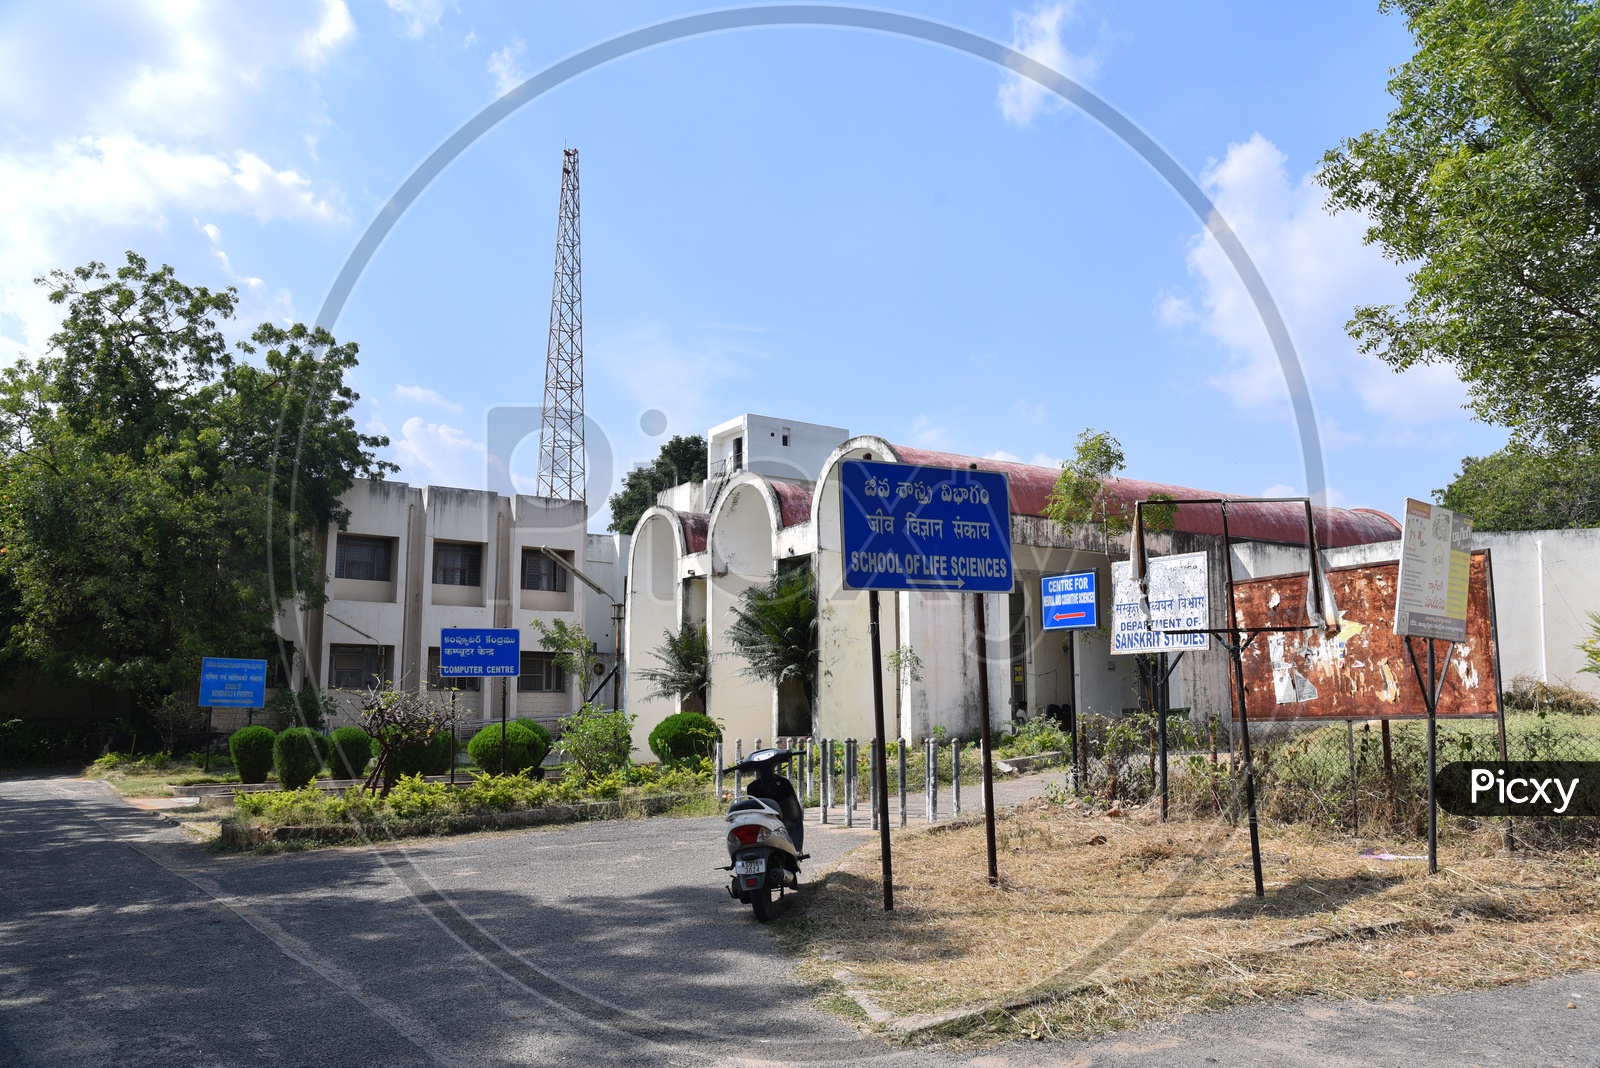 School Of Life Sciences at University of Hyderabad